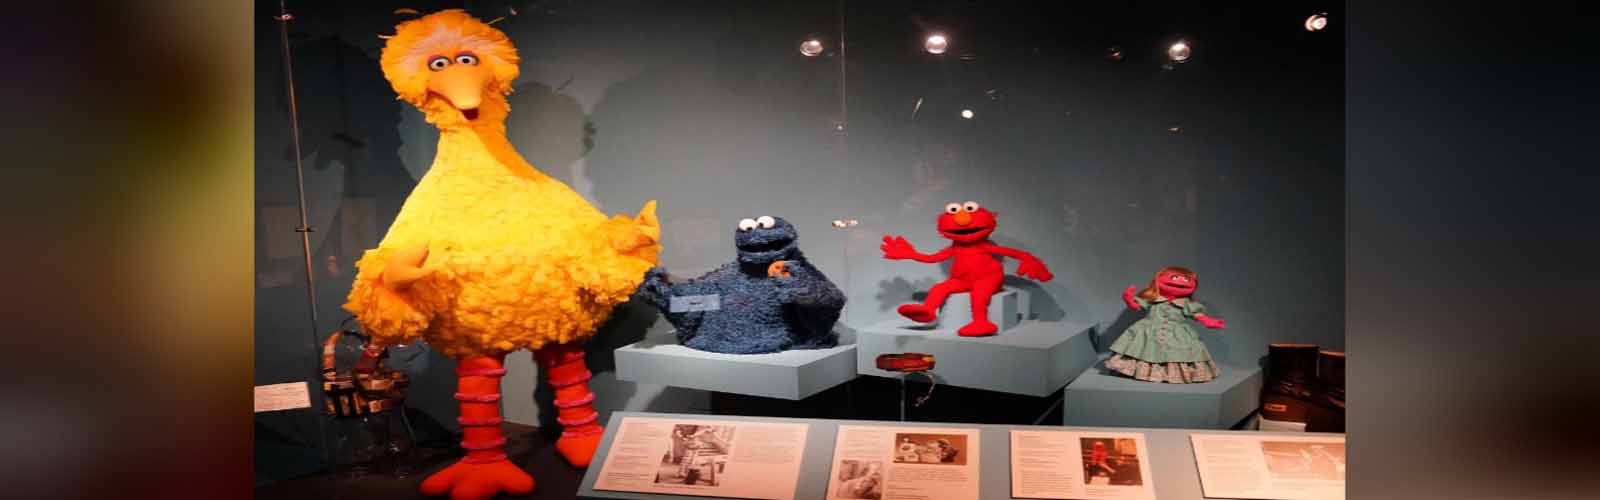 Exhibit in New York celebrates life of Muppets creator Jim Henson